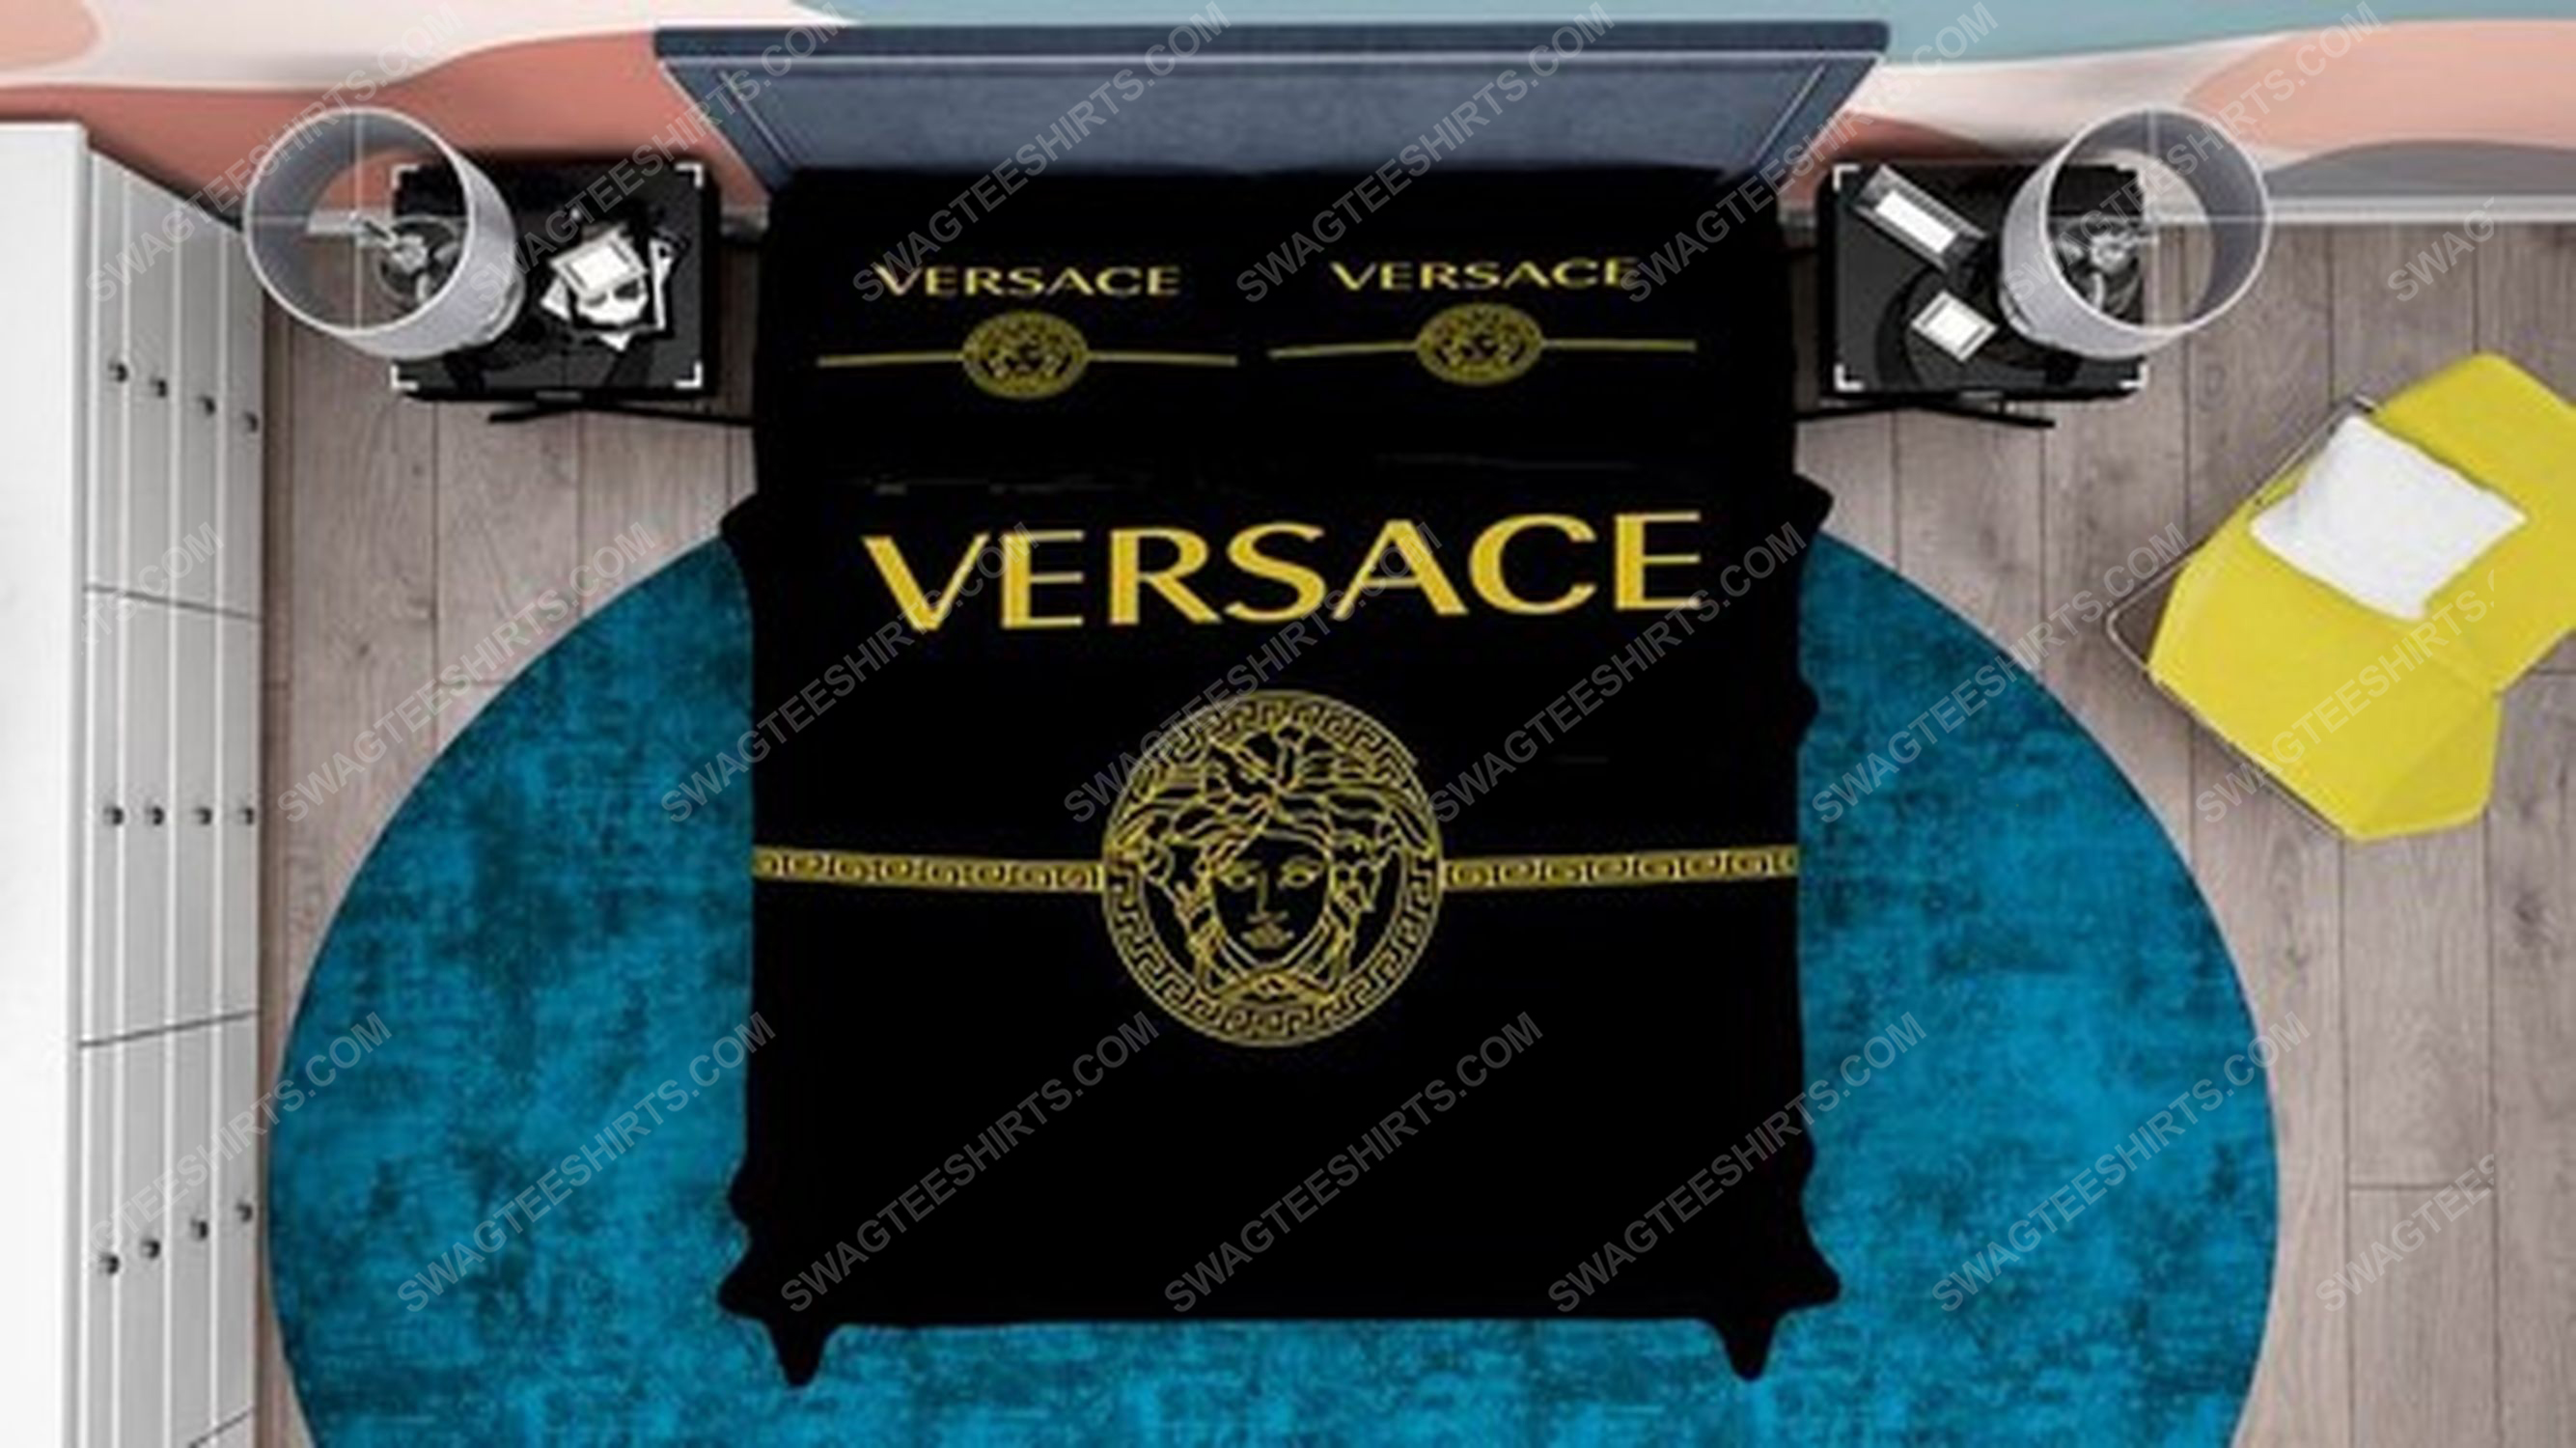 Versace black and gold full print duvet cover bedding set 1